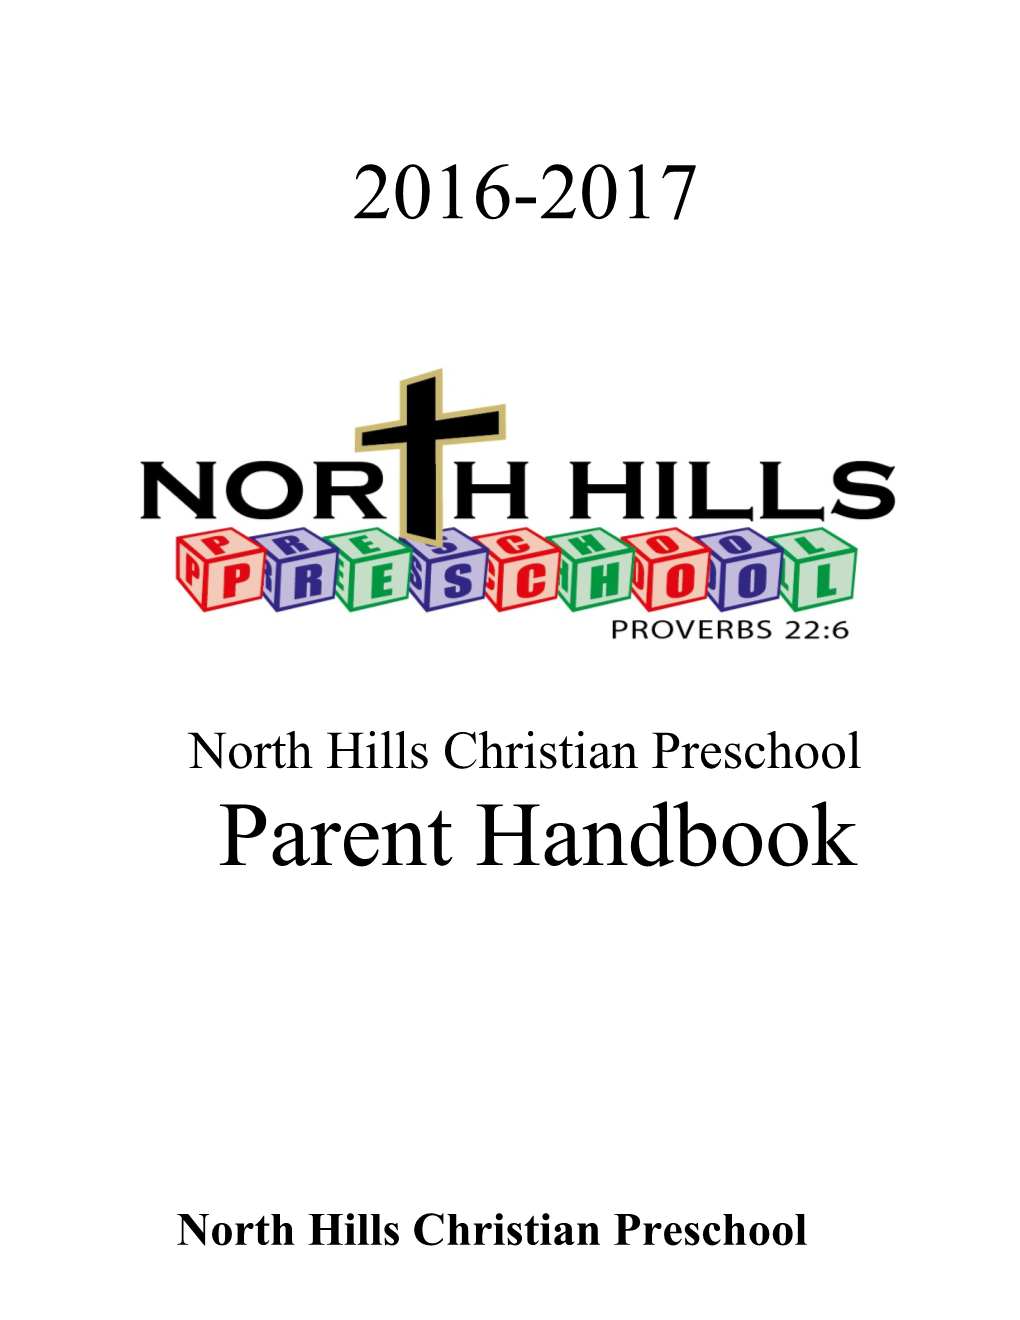 North Hills Christian Preschool